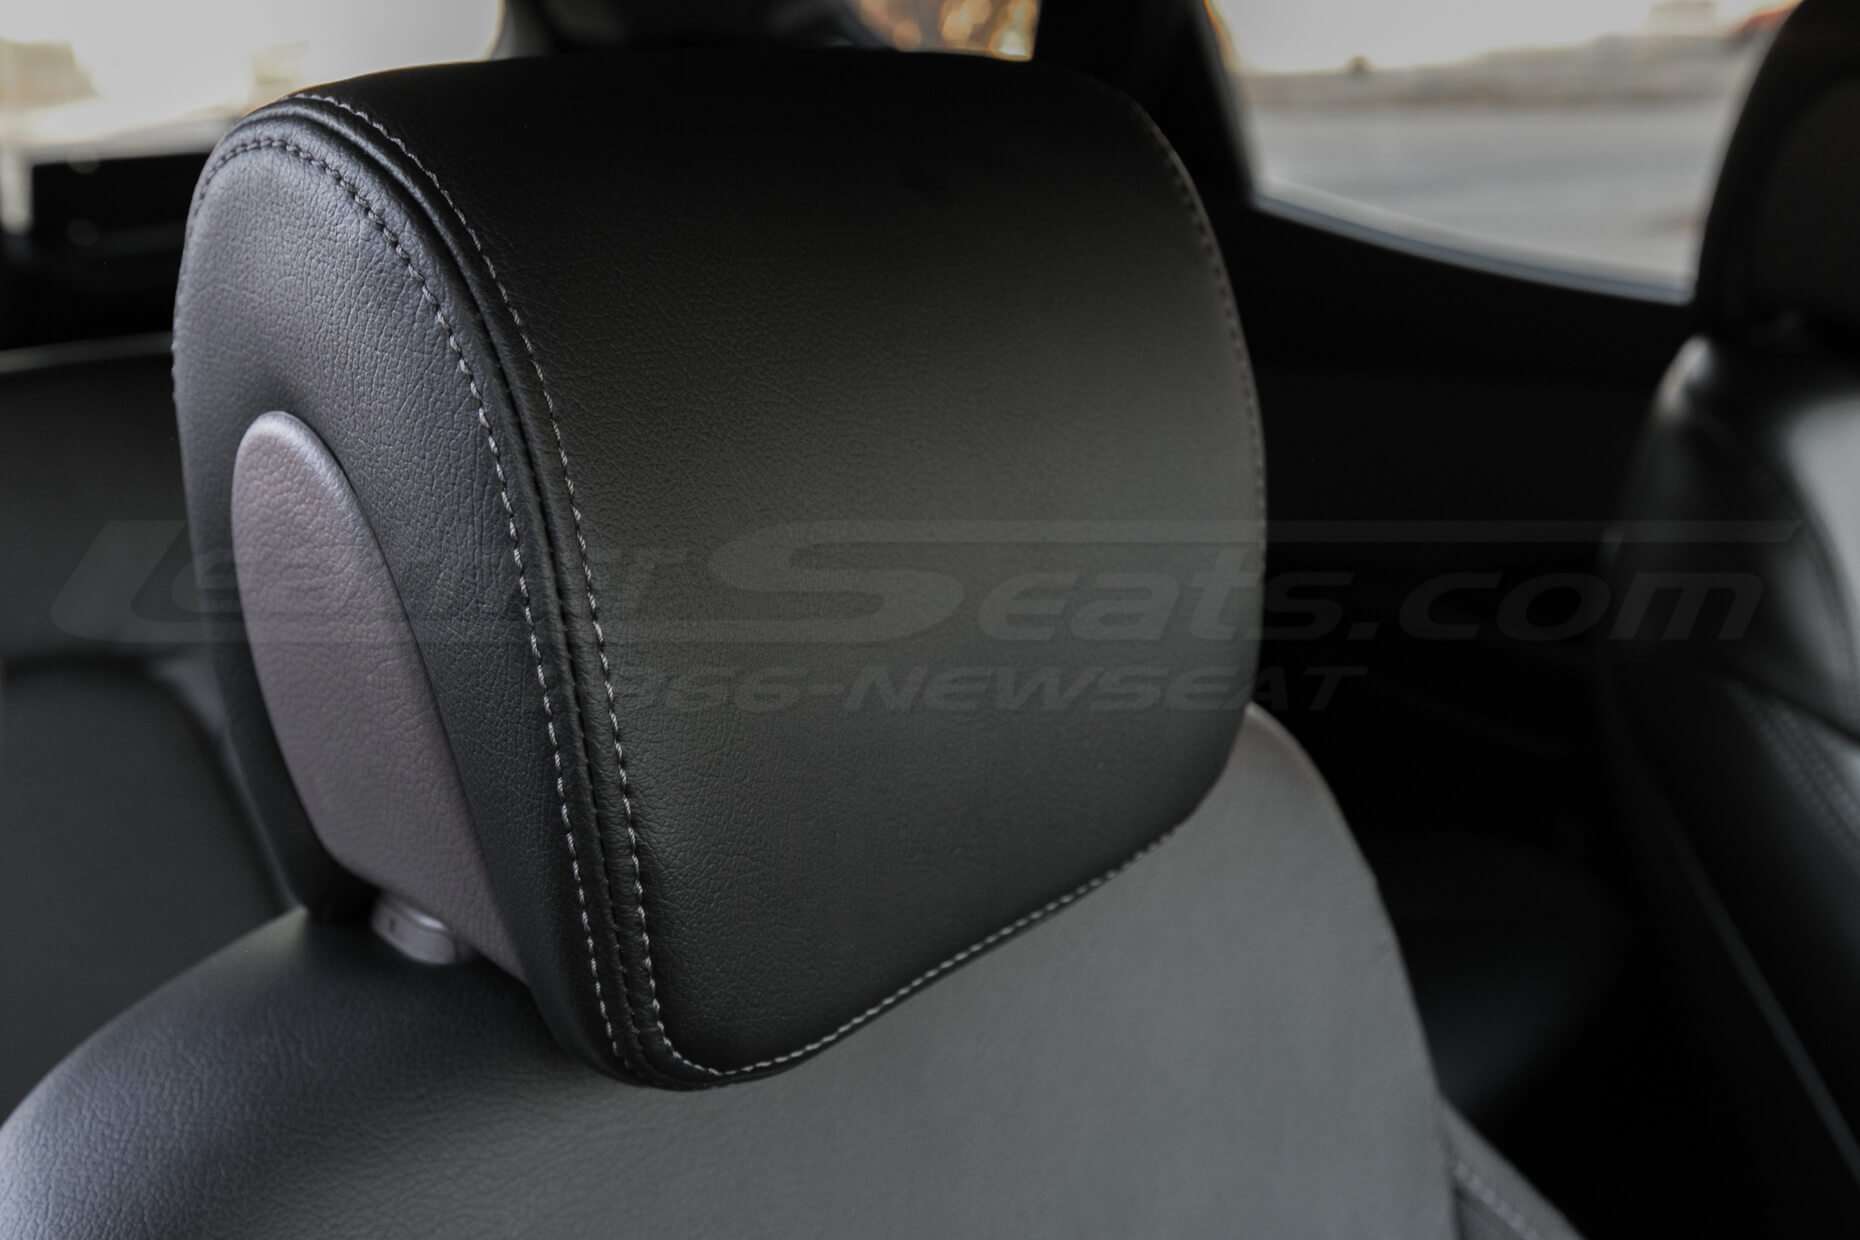 Hyundai Santa Fe Sport installed leather kit - Black - Headrest close-up